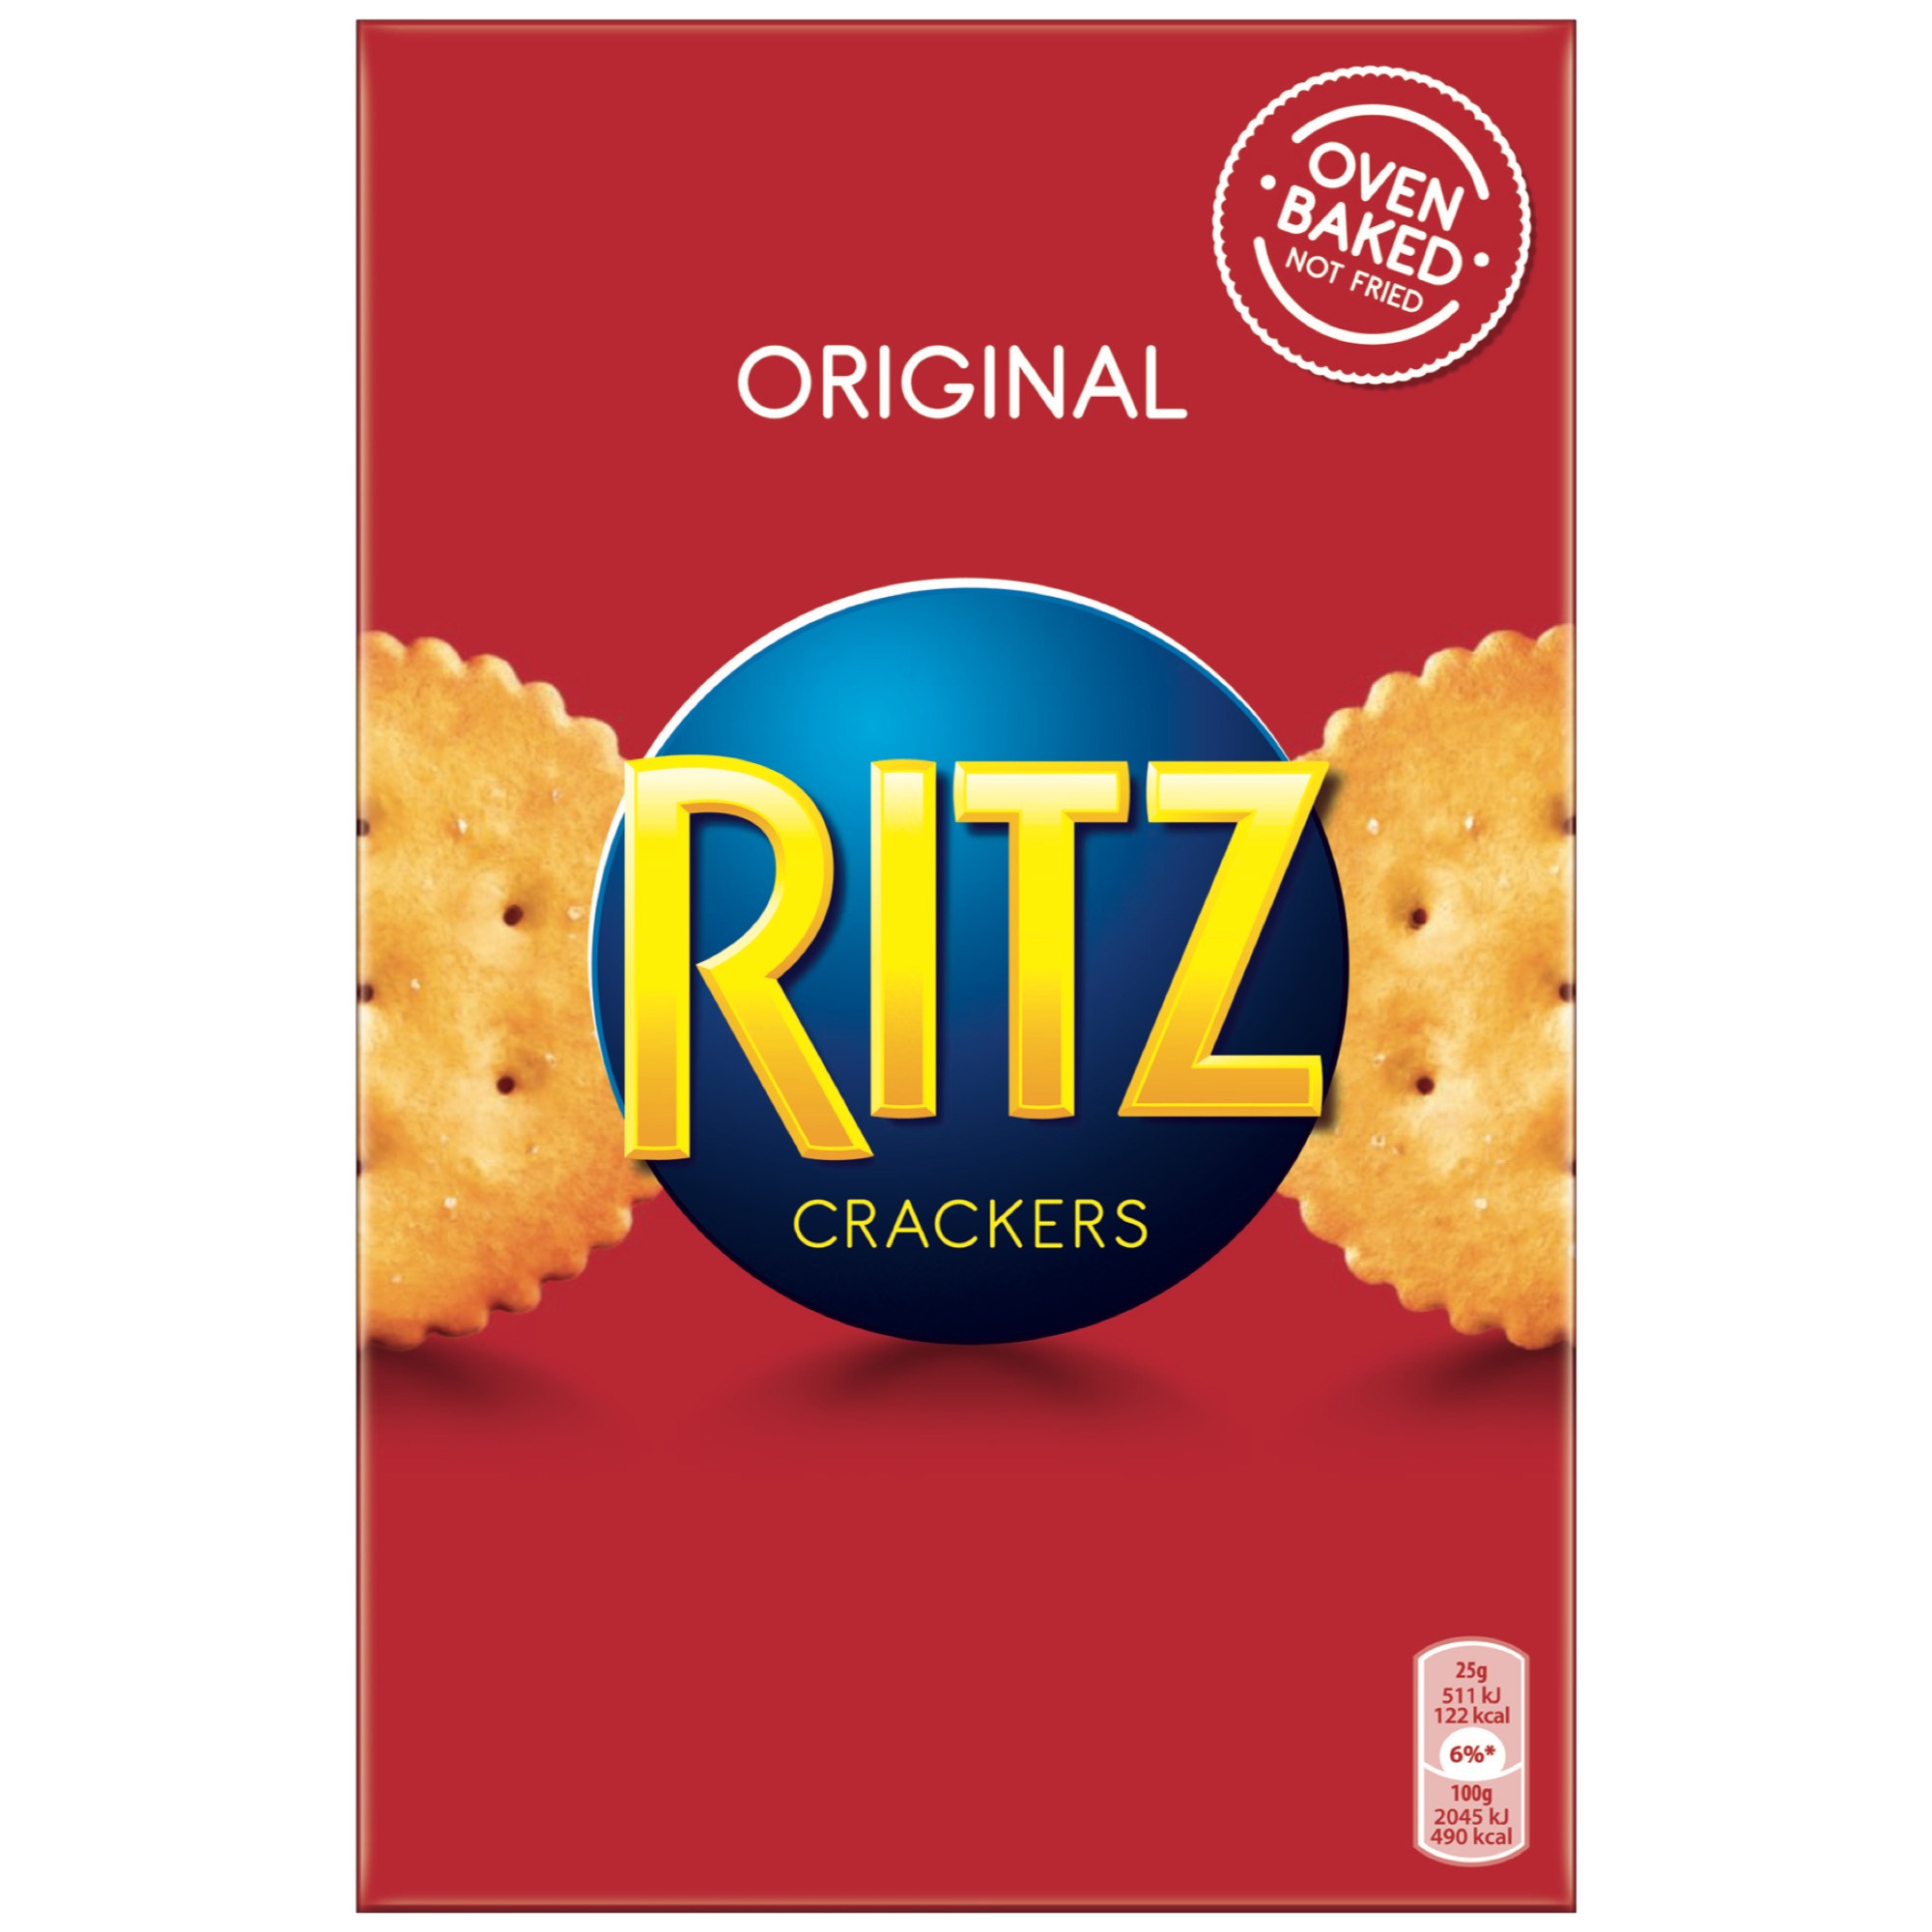 Ritz Crackers 200g, Original